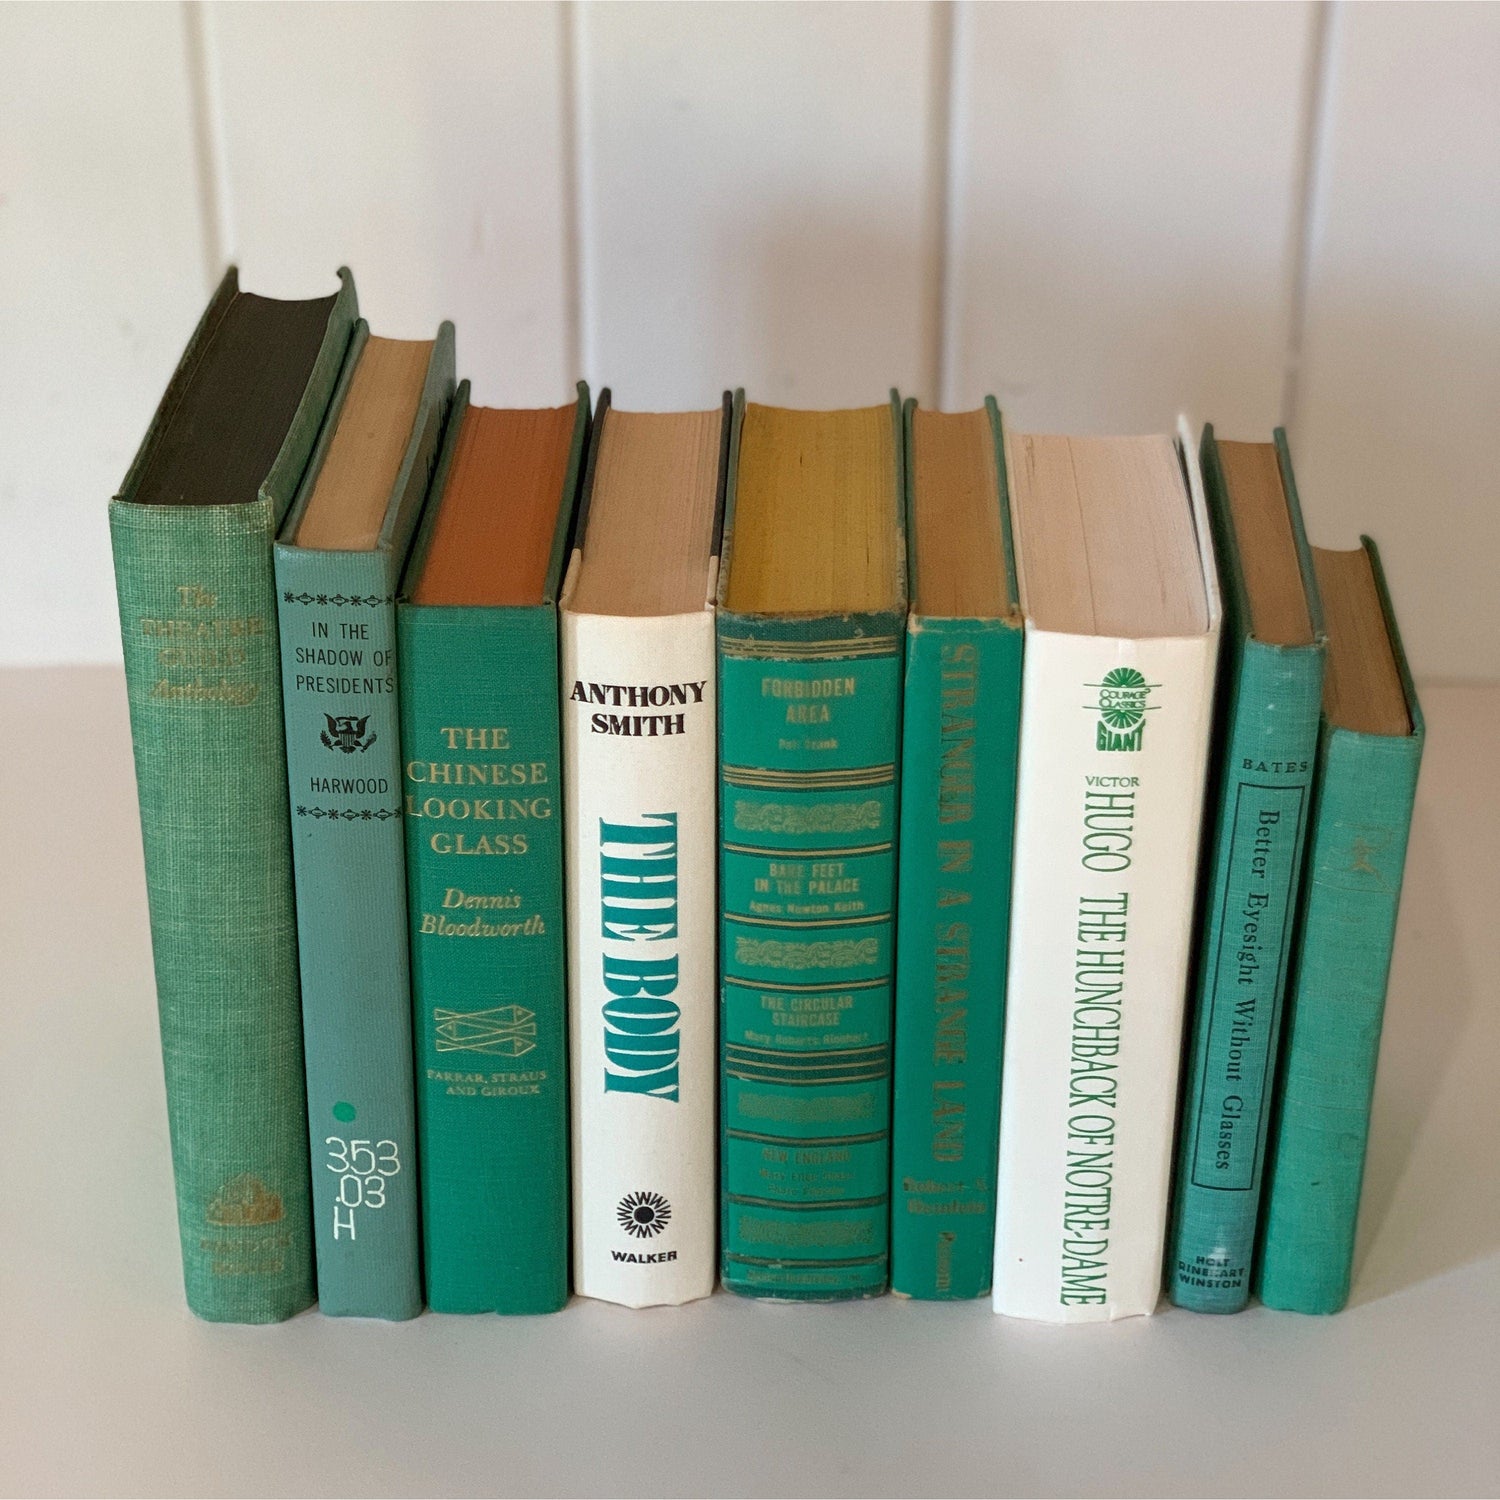 Teal Green and White Vintage Books for Bookshelf Decor, Decorative Books, Handmade Decor